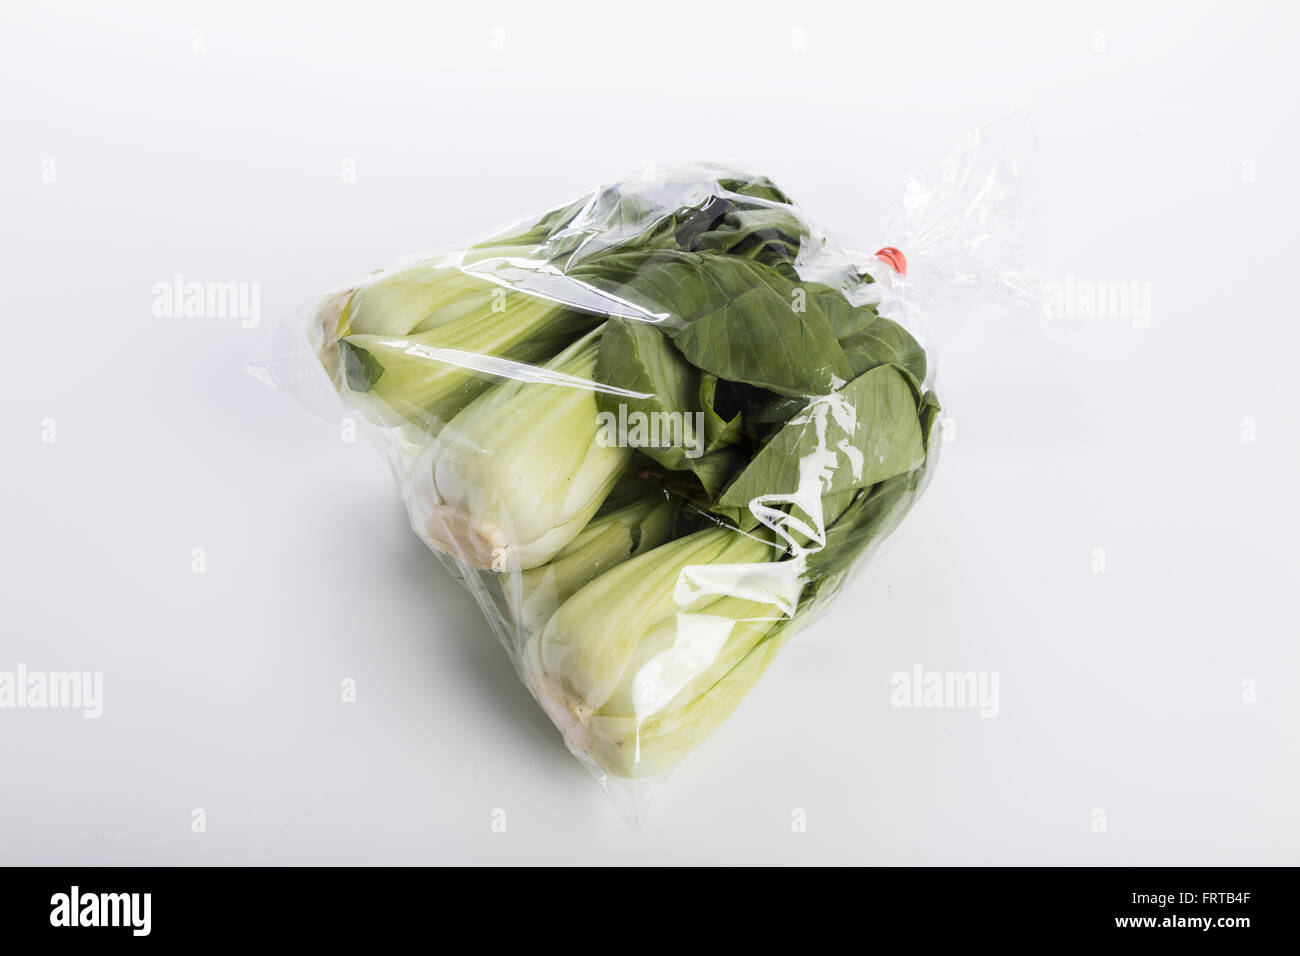 Green Bok choy vegetable on white background Stock Photo